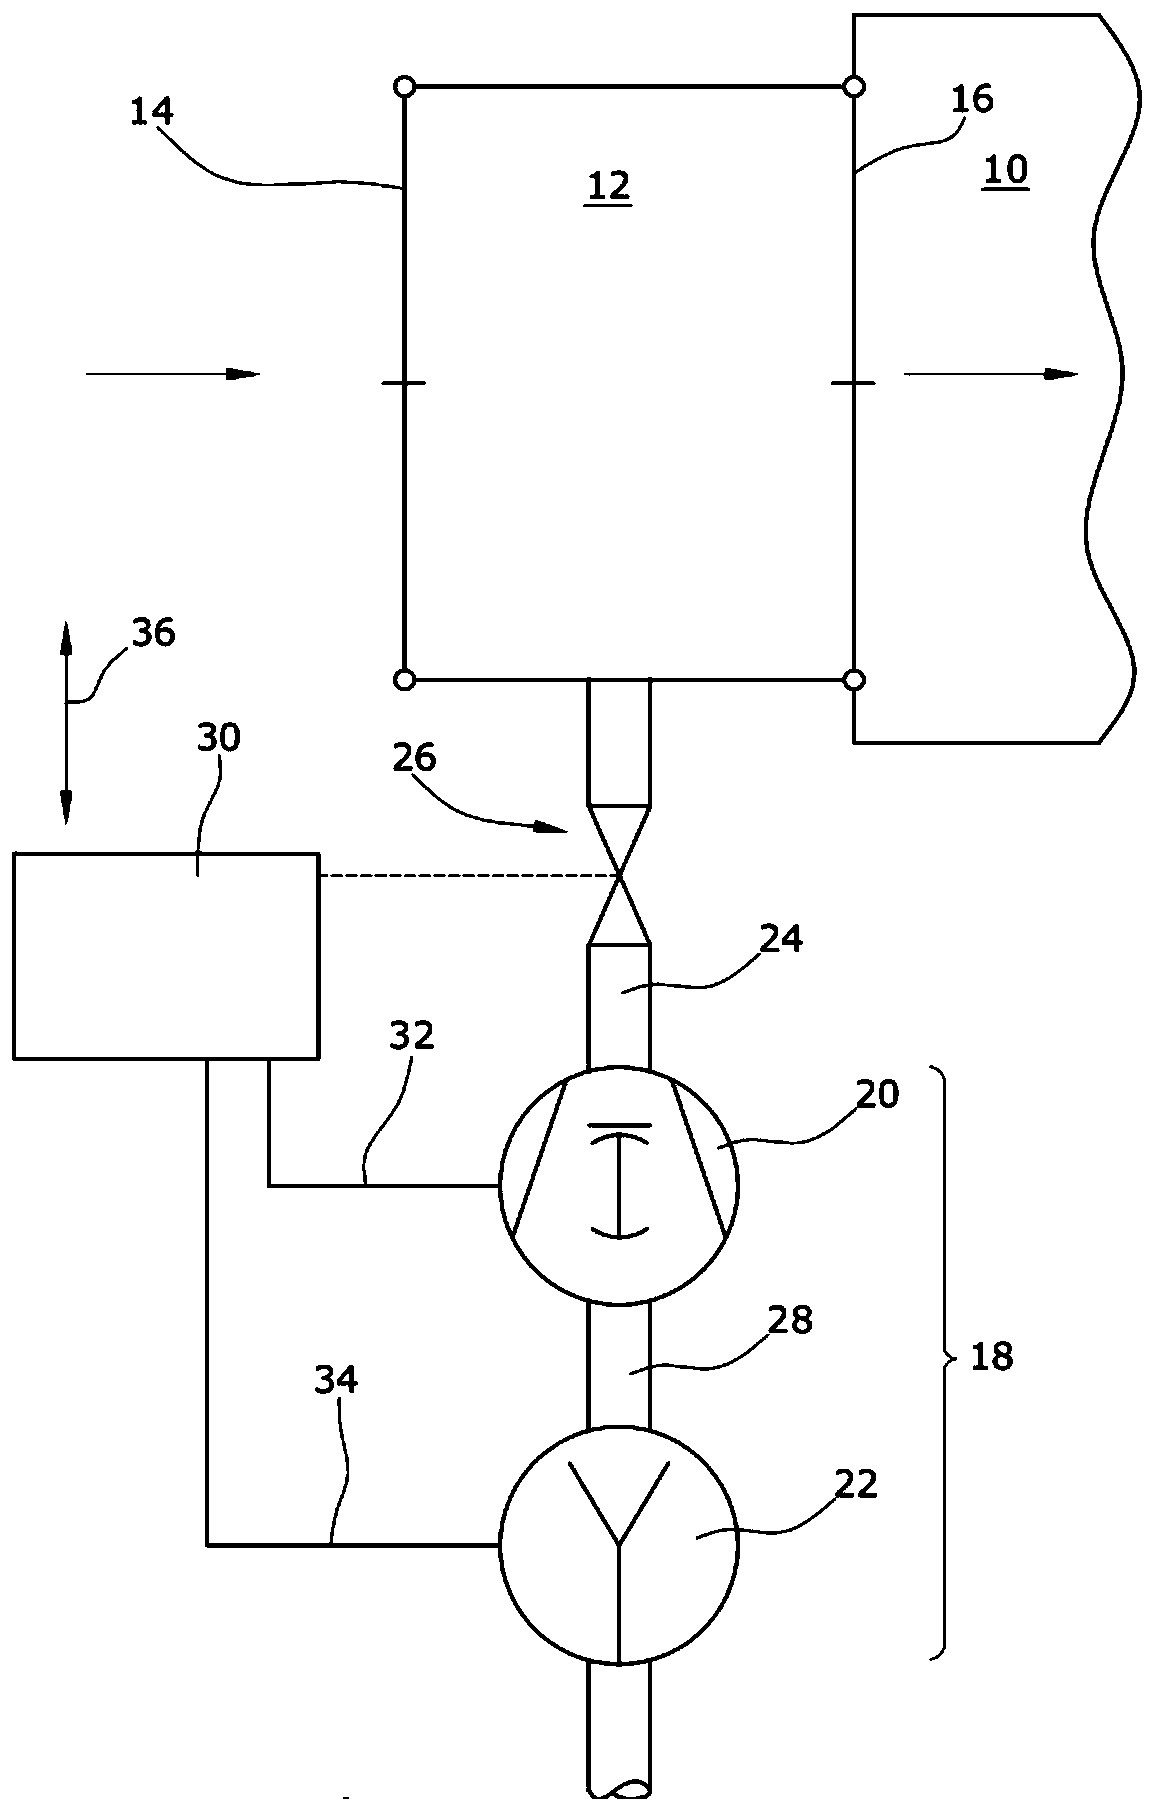 Method for operating vacuum pump system